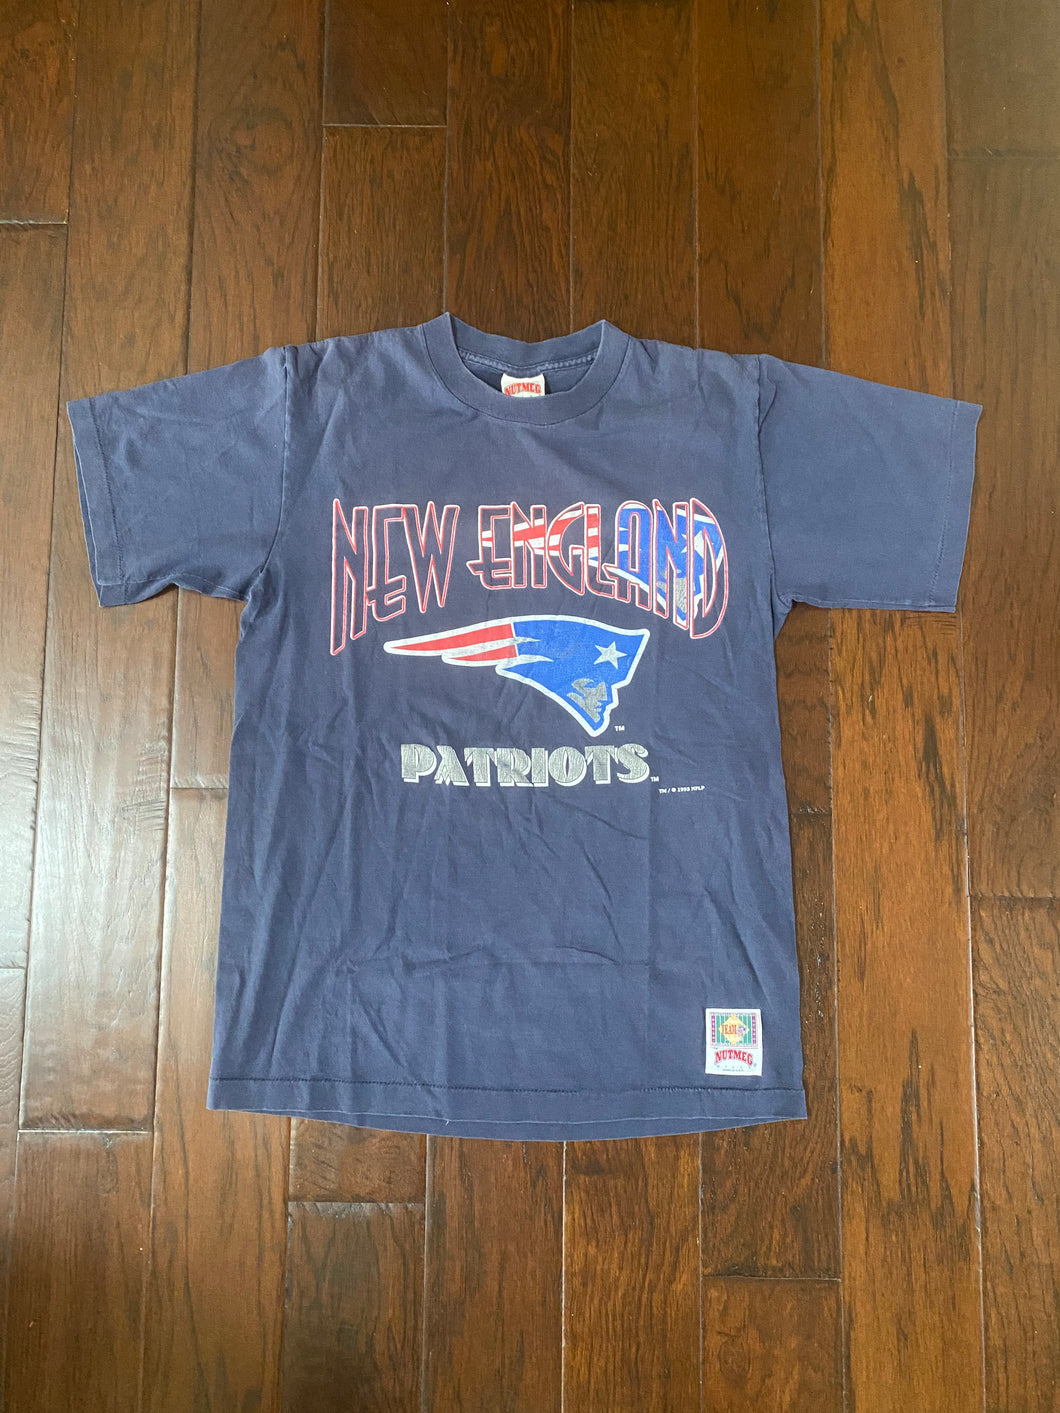 New England Patriots 1993 Vintage Distressed T-shirt